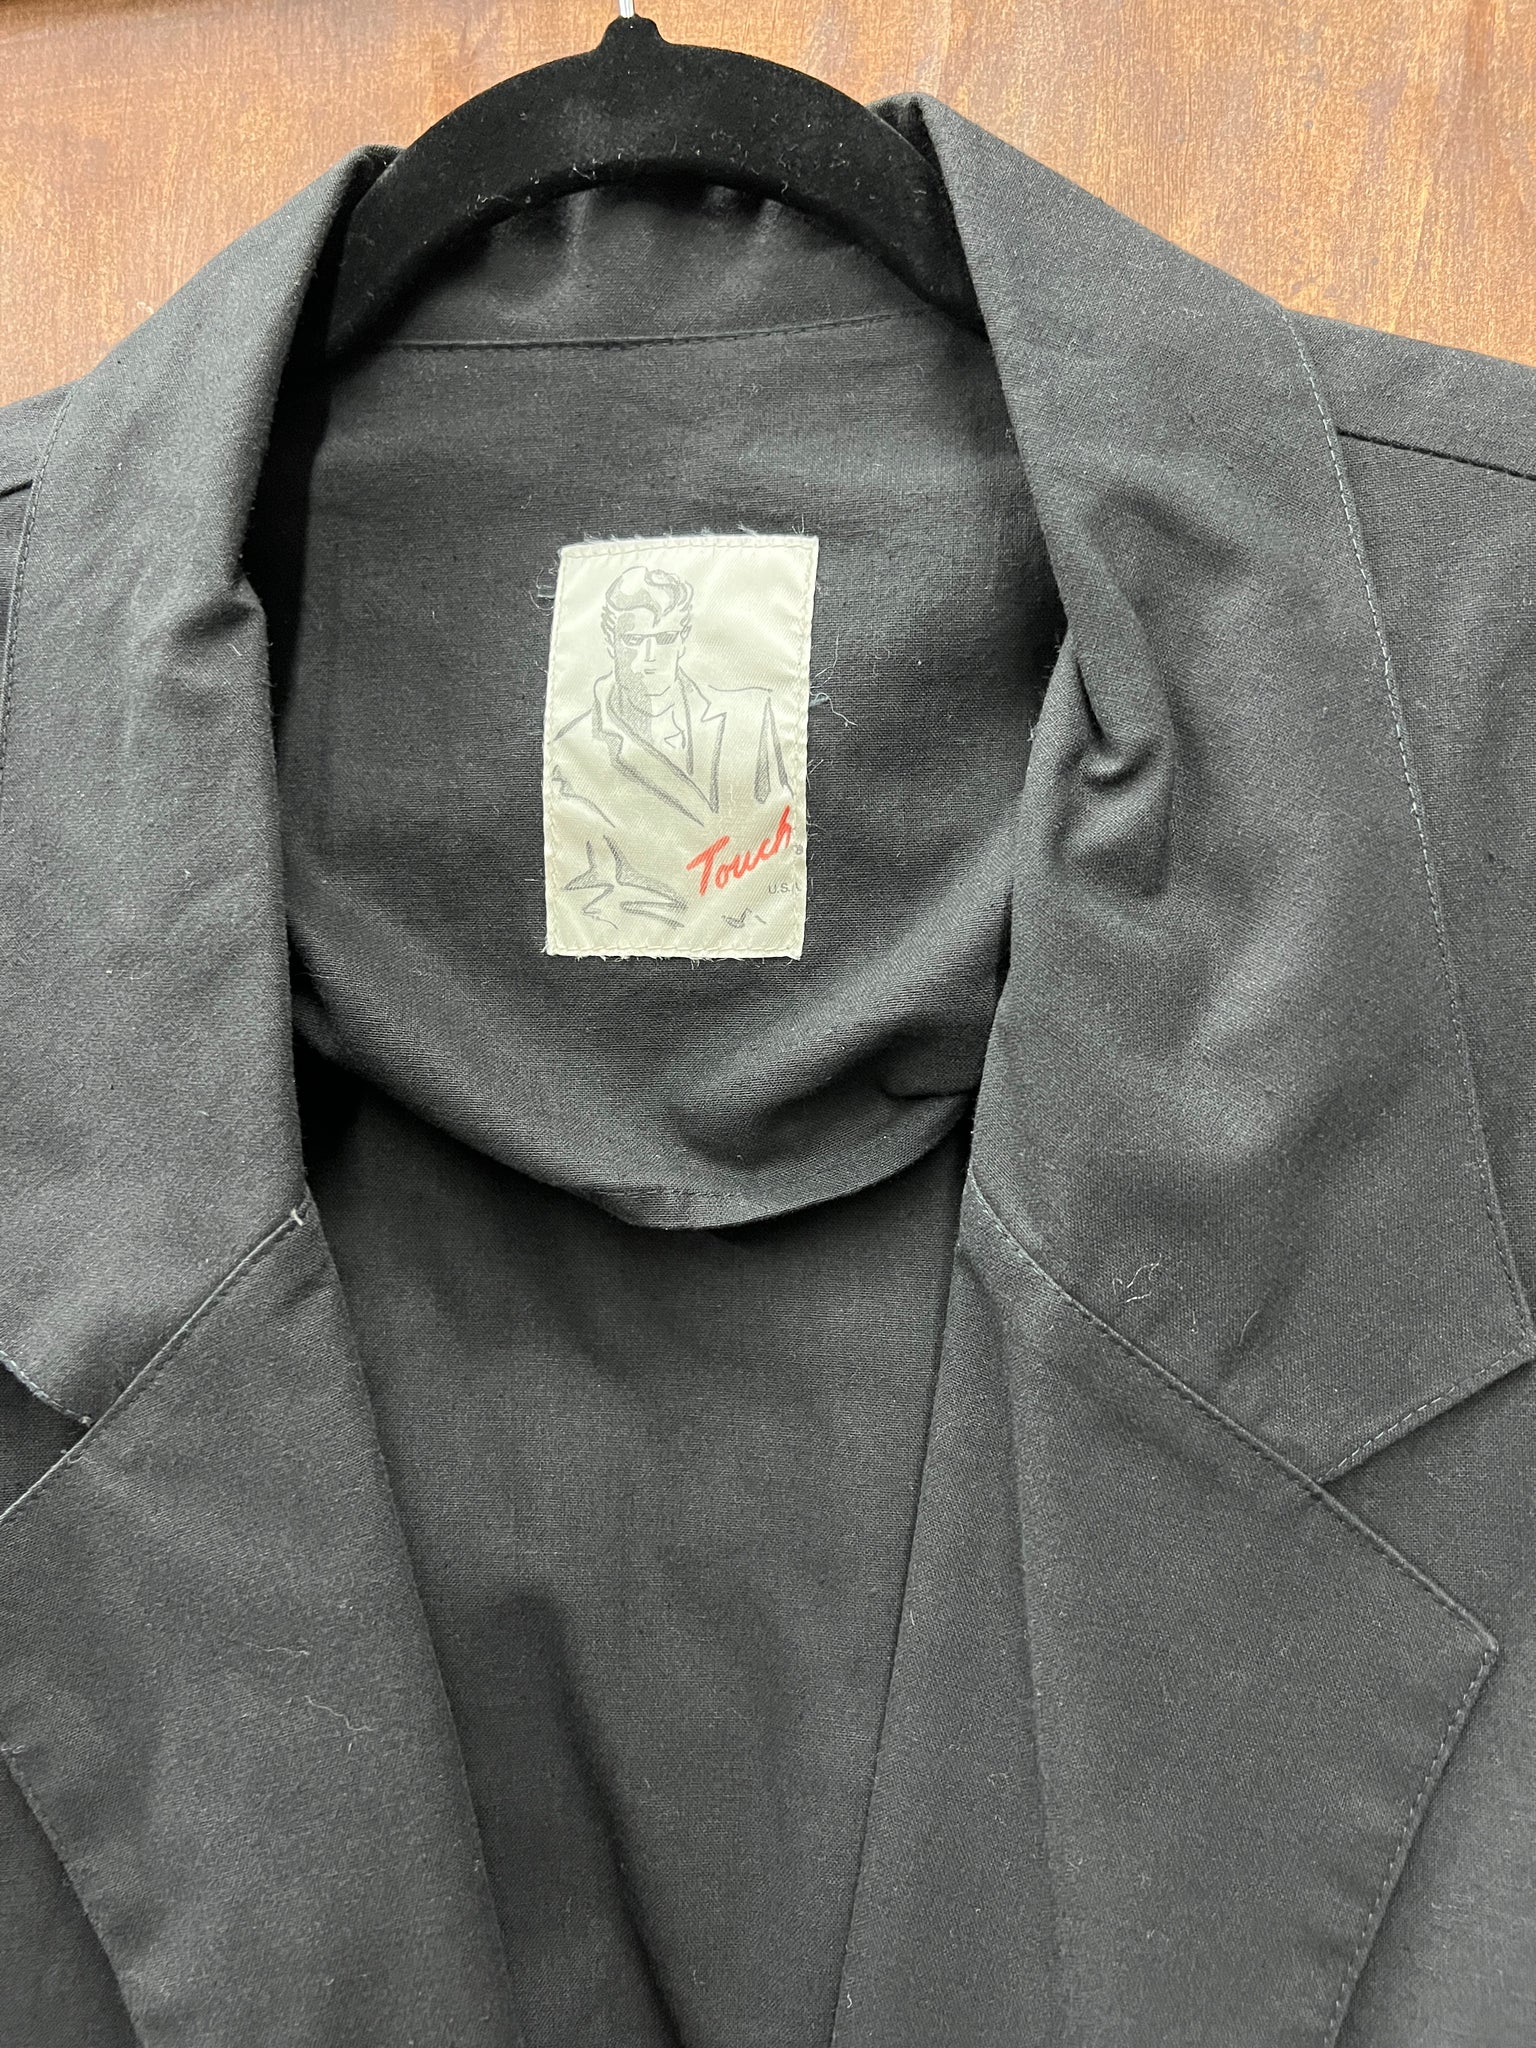 1990s MENS JACKET- Touch black oversized blazer